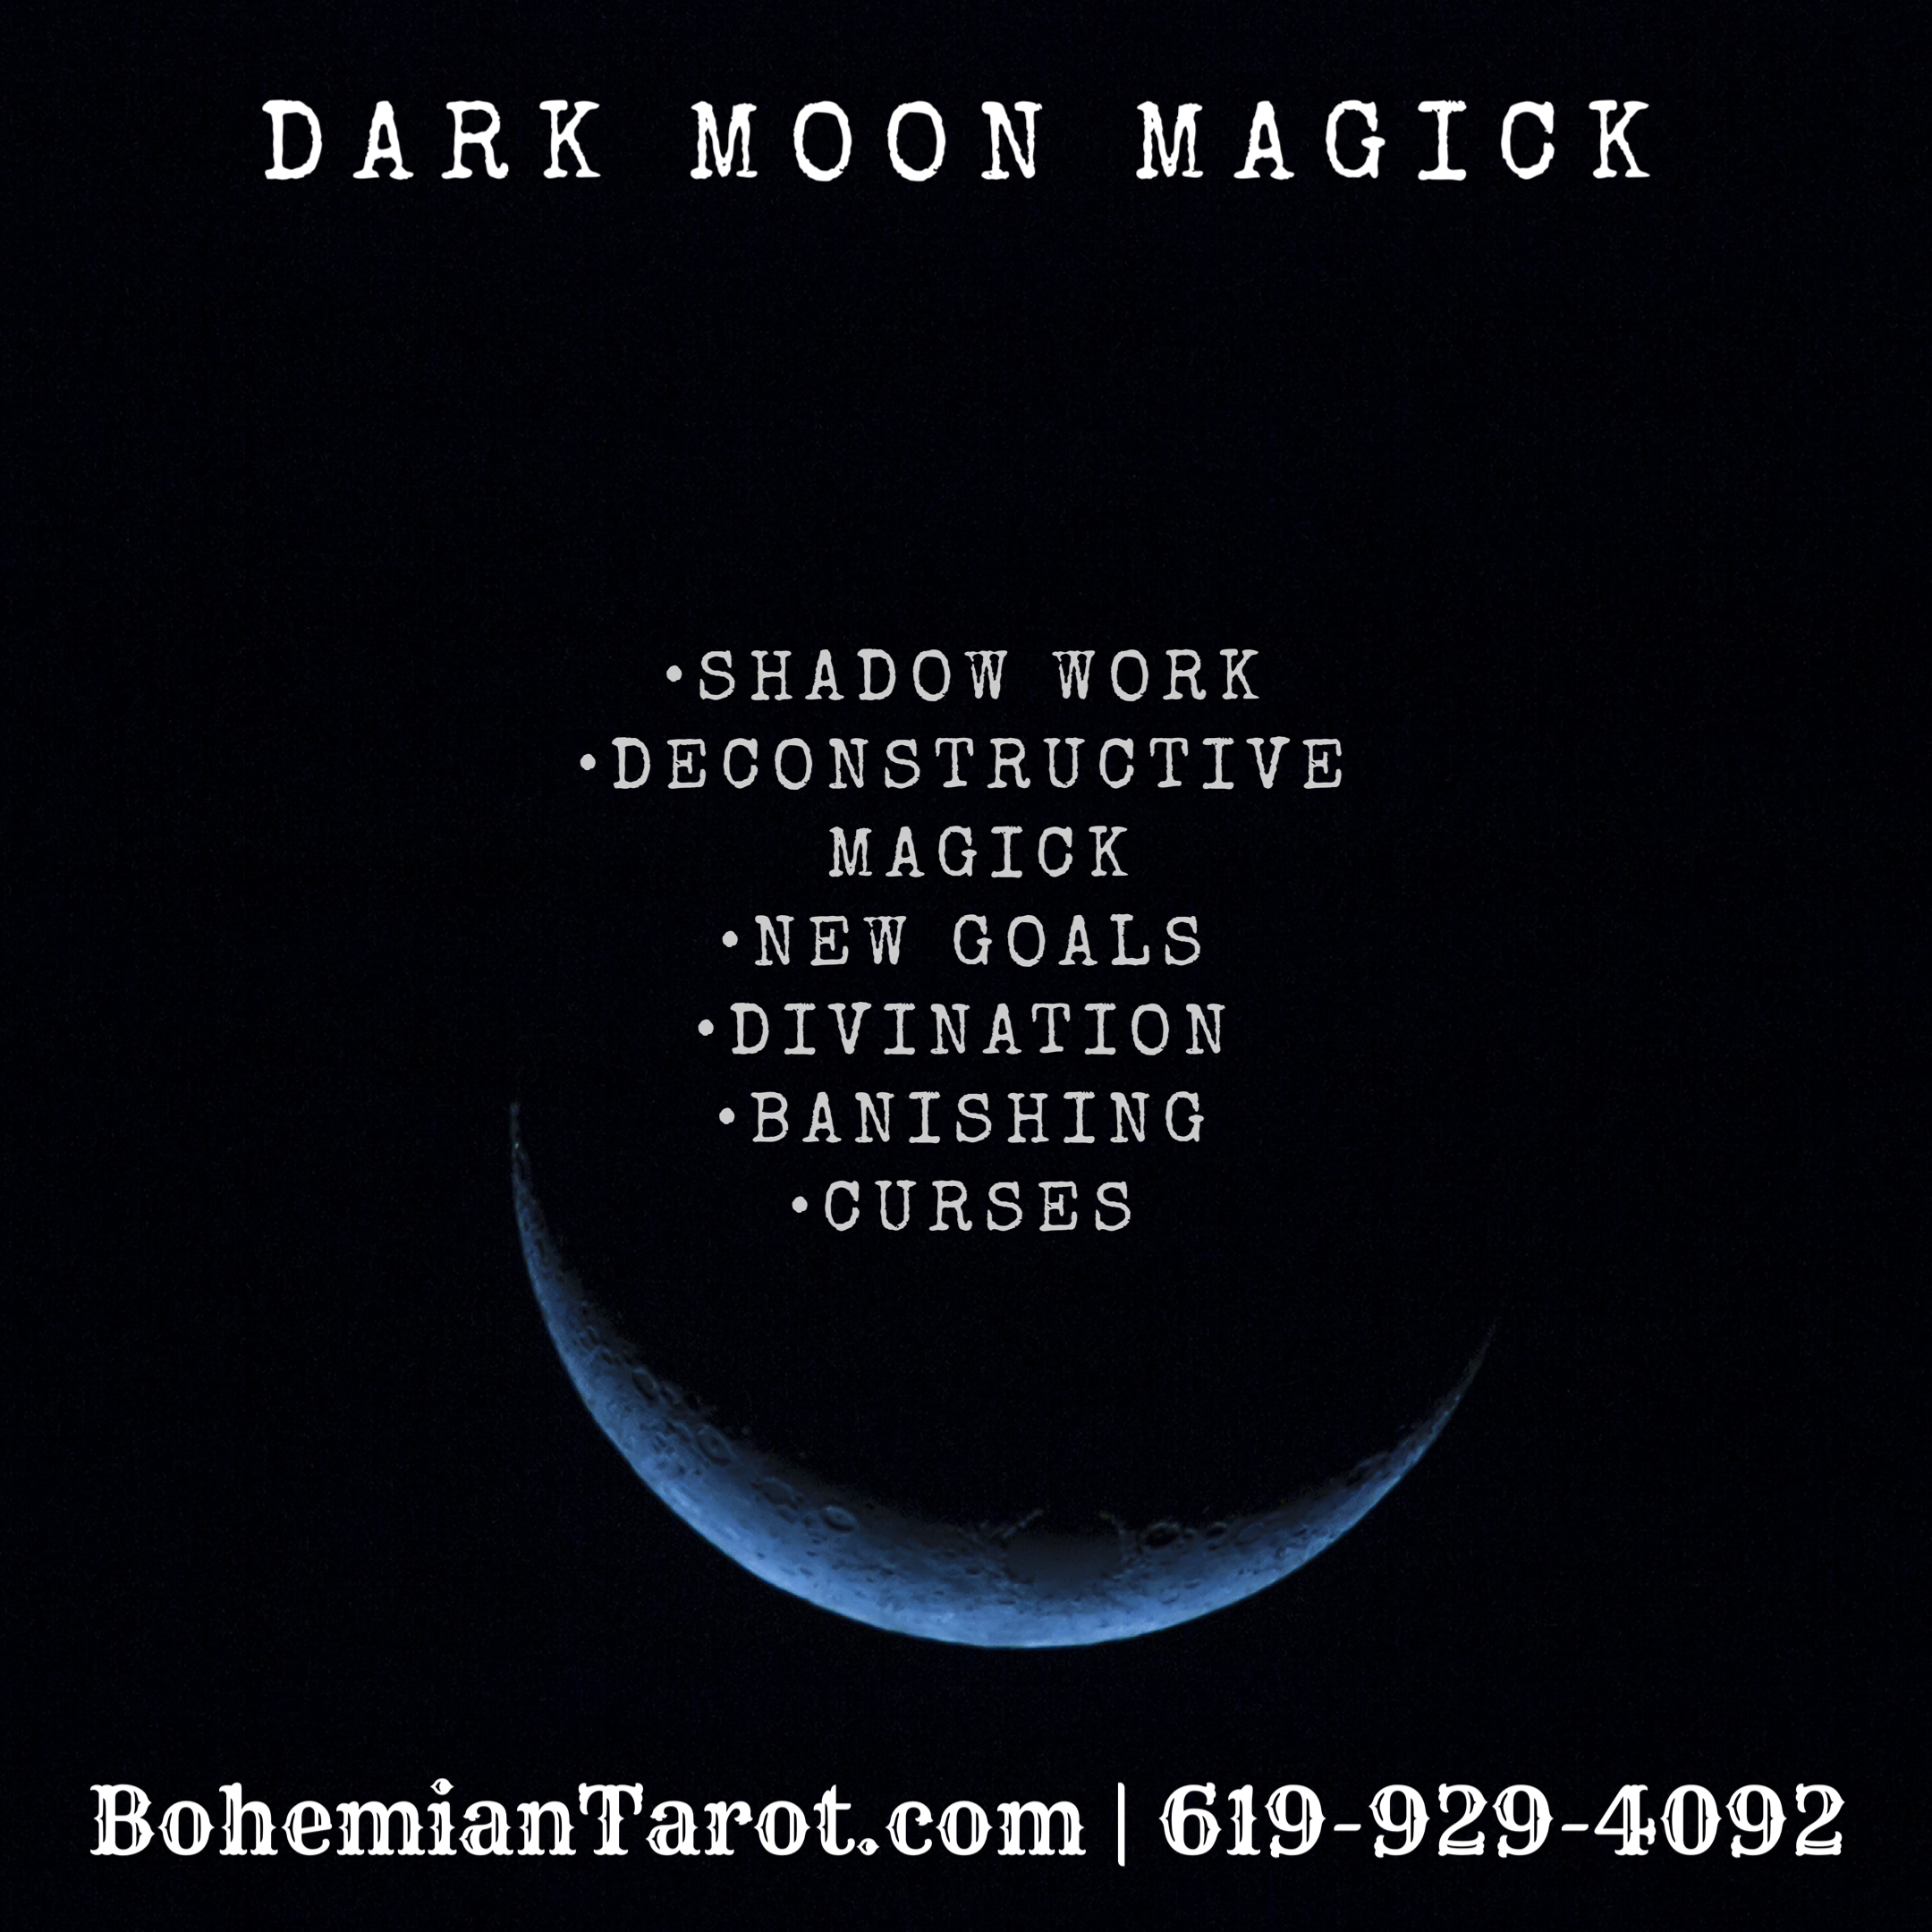 New Moon Magick for the Dark Moon